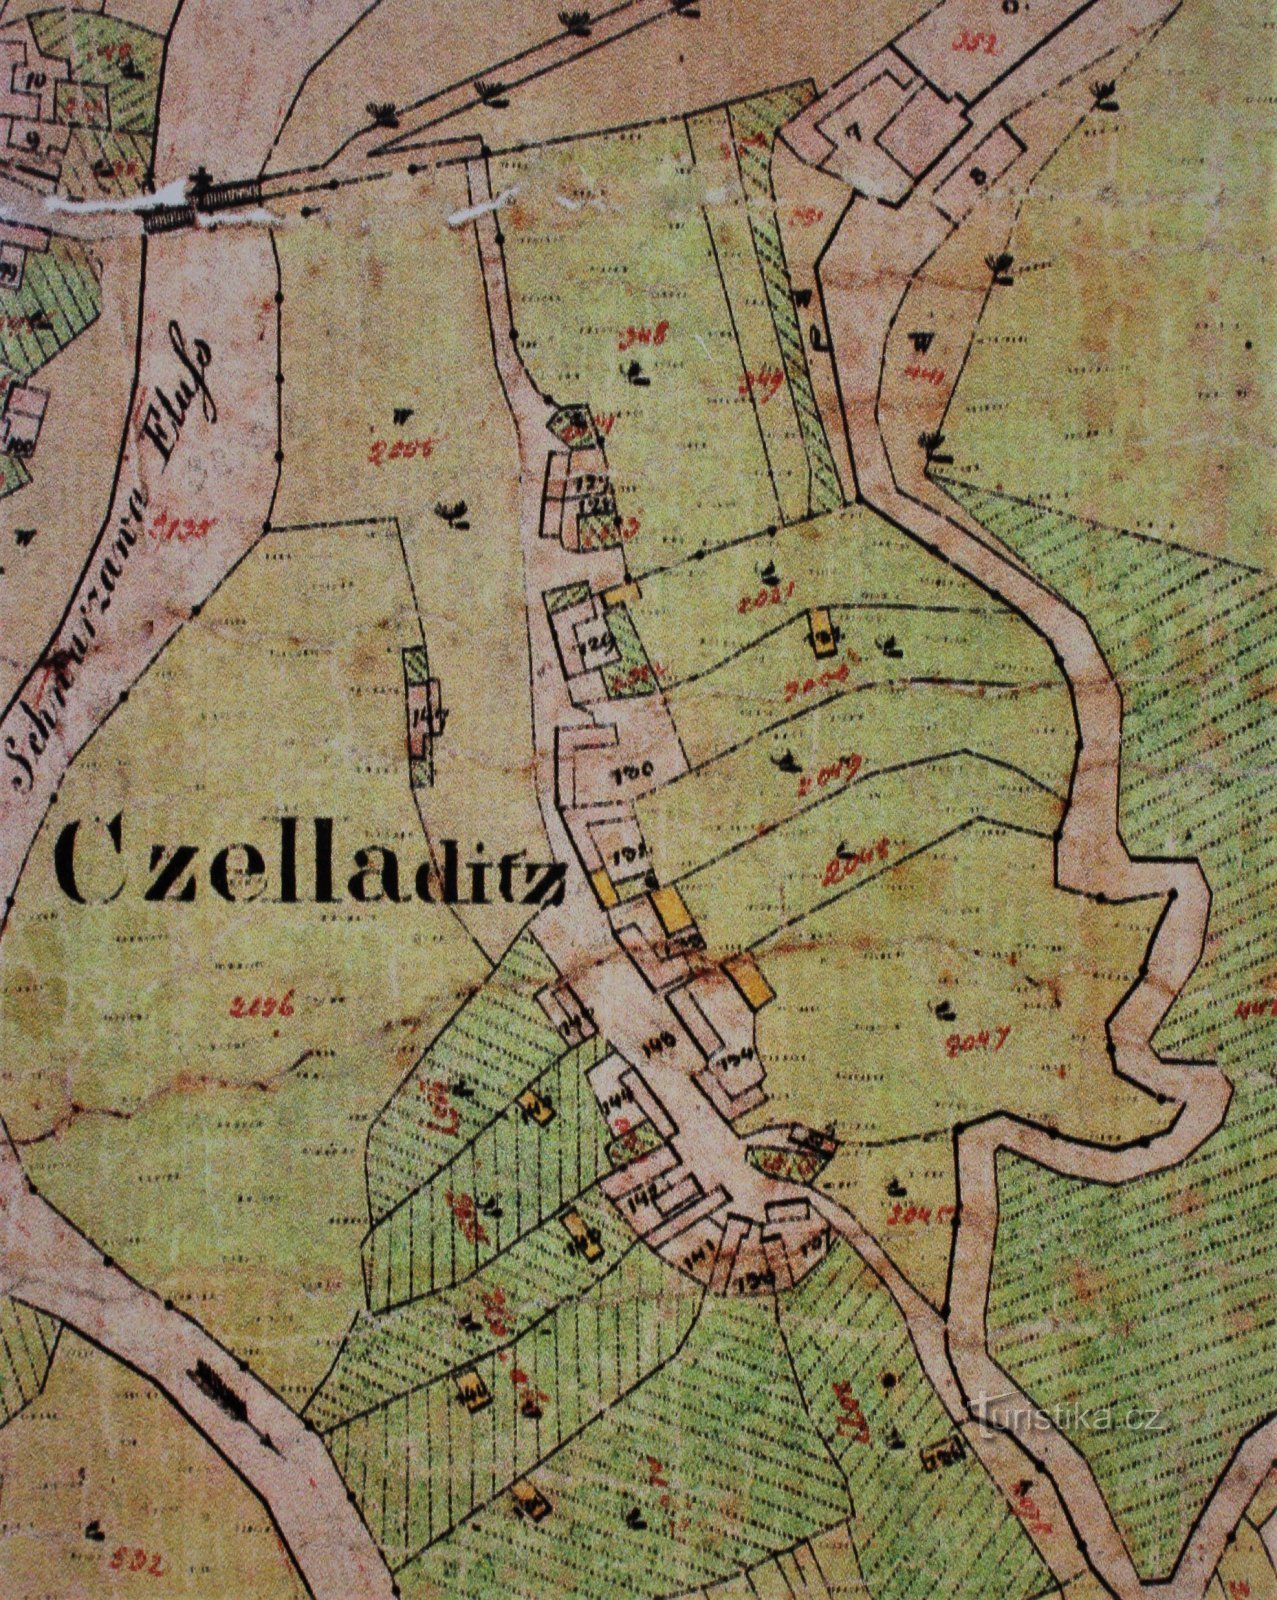 Kaart van Čeladice uit 1825 (afkomstig van het informatiebord)